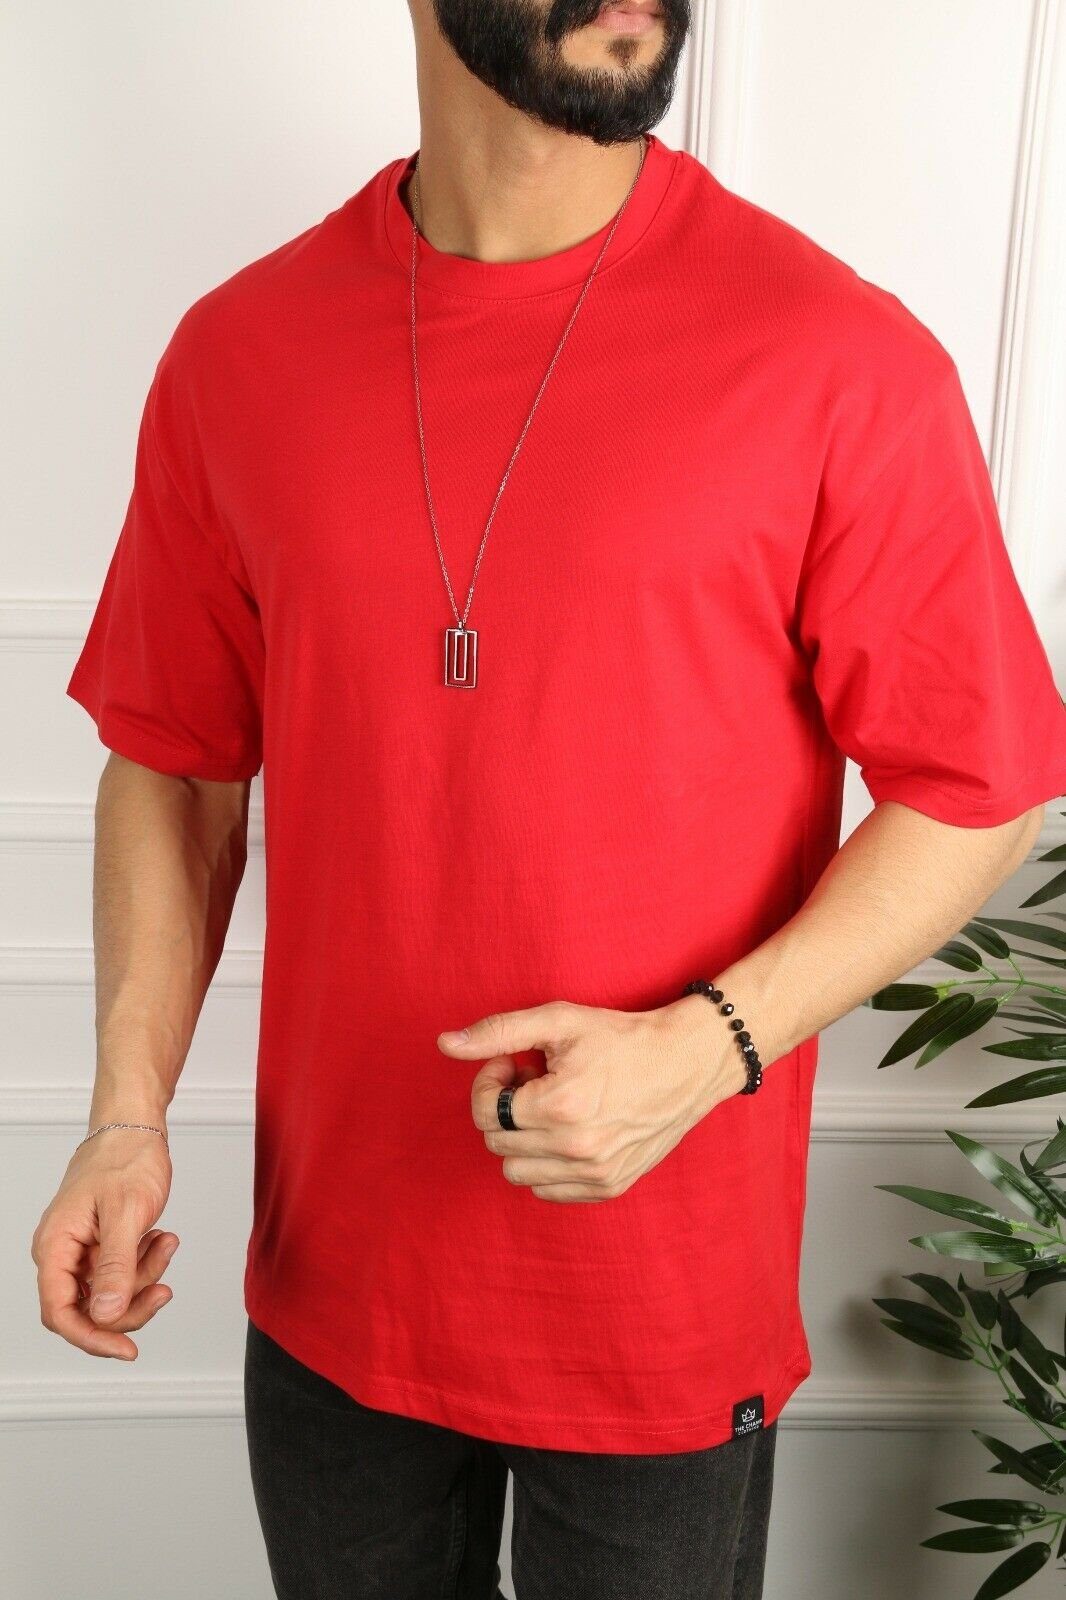 Megaman Jeans T-Shirt Oversize Herren T-Shirt Basic Shirt Longshirt Premium Qualität Rot